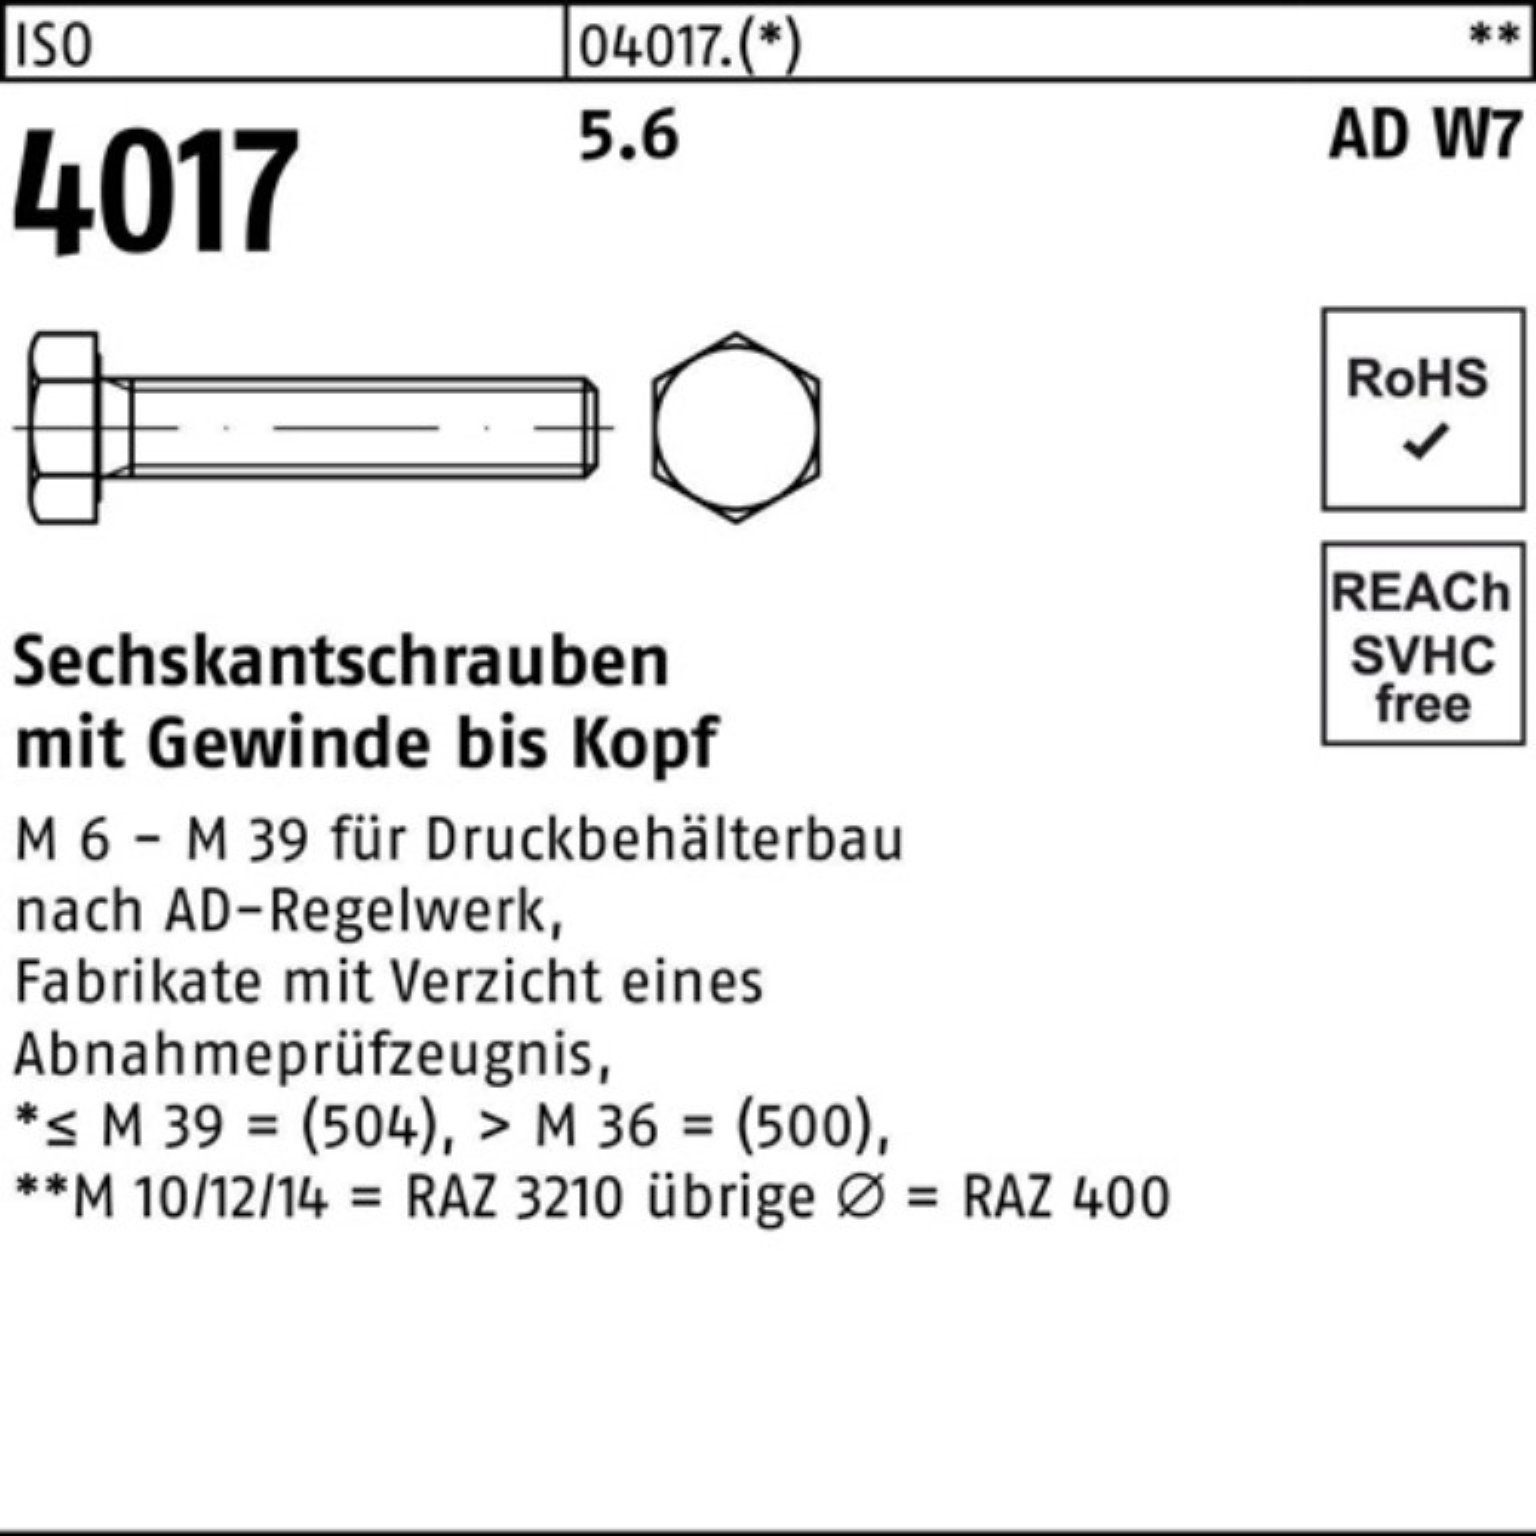 5.6 IS AD Sechskantschraube VG Stück Sechskantschraube 100er M30x Pack Bufab 50 1 4017 ISO W7